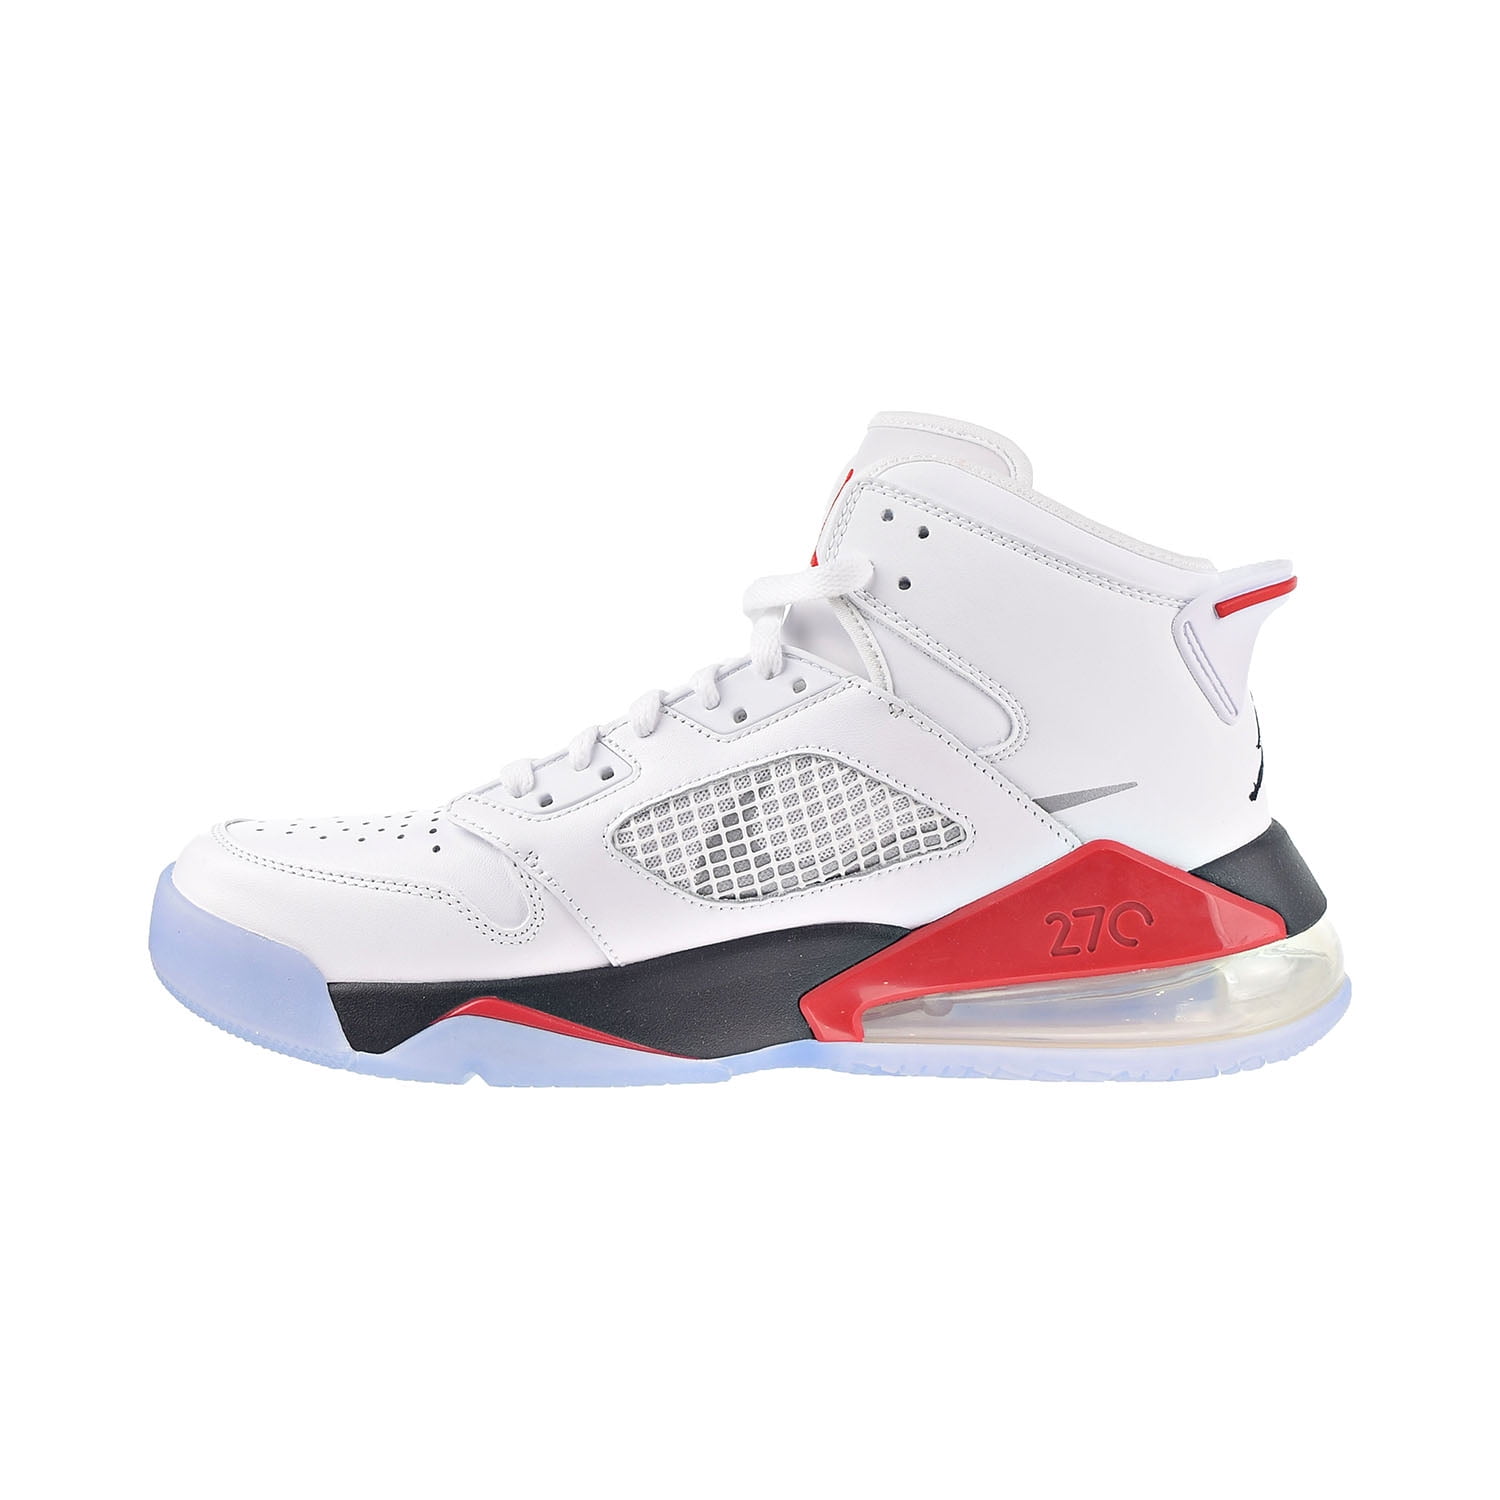 Nike Jordan Mars 270 Men's Shoes White-Reflect Silver-Fire cd7070-100 - Walmart.com